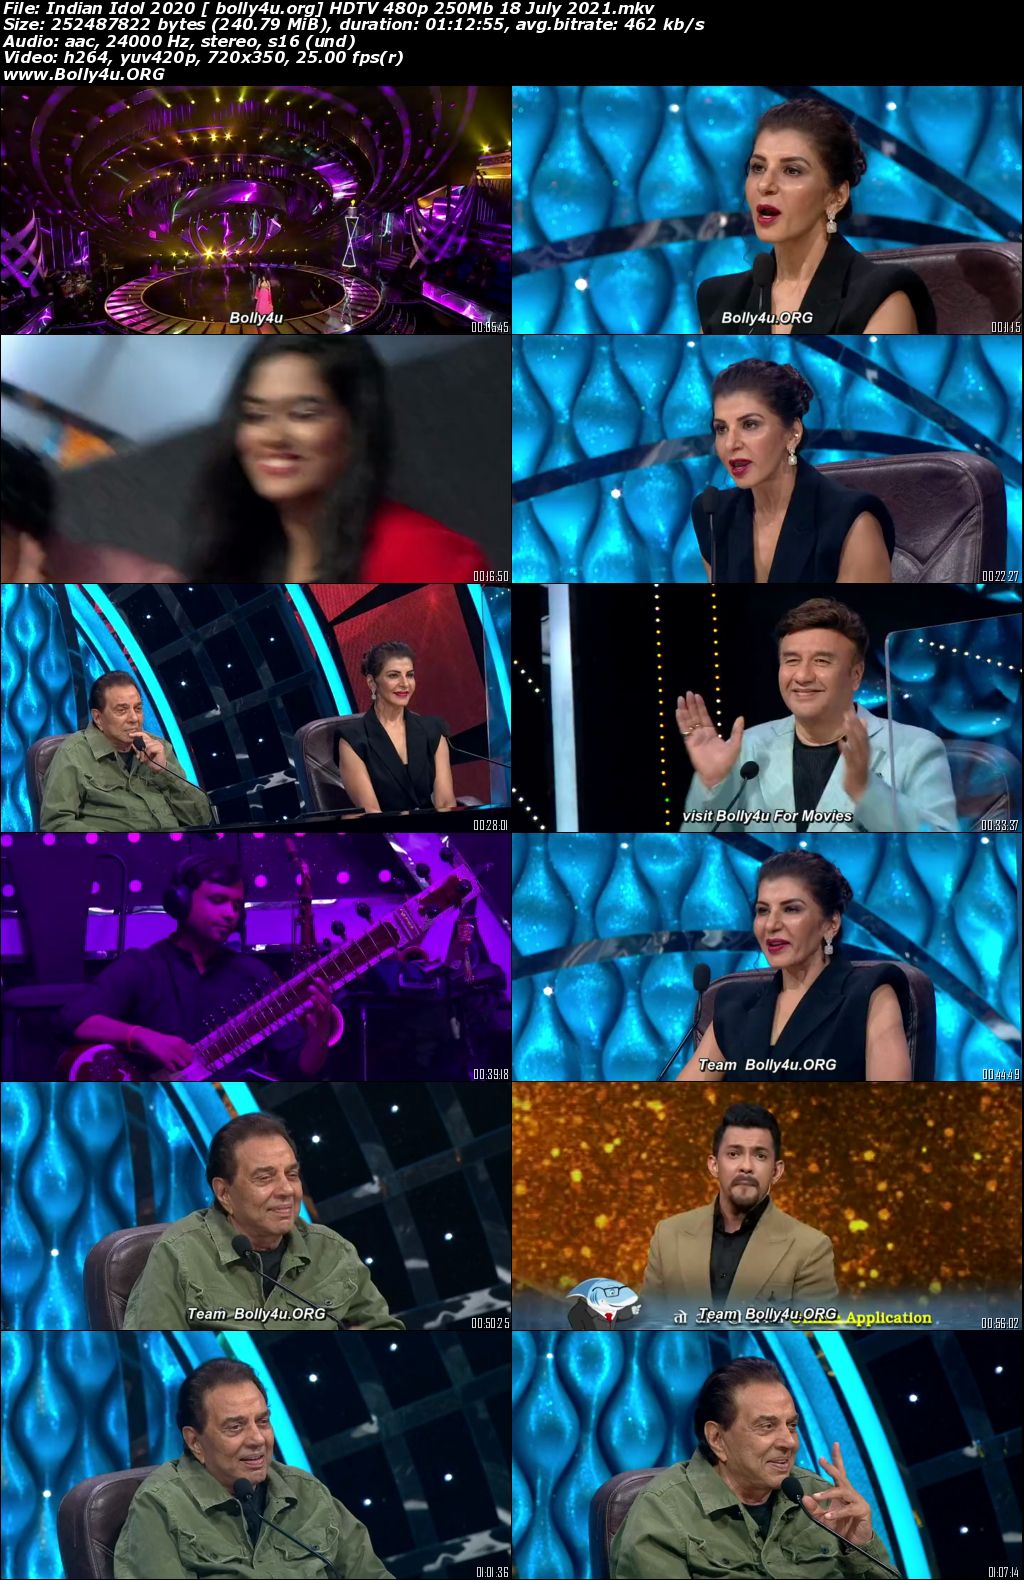 Indian Idol HDTV 480p 250MB 18 July 2021 Download